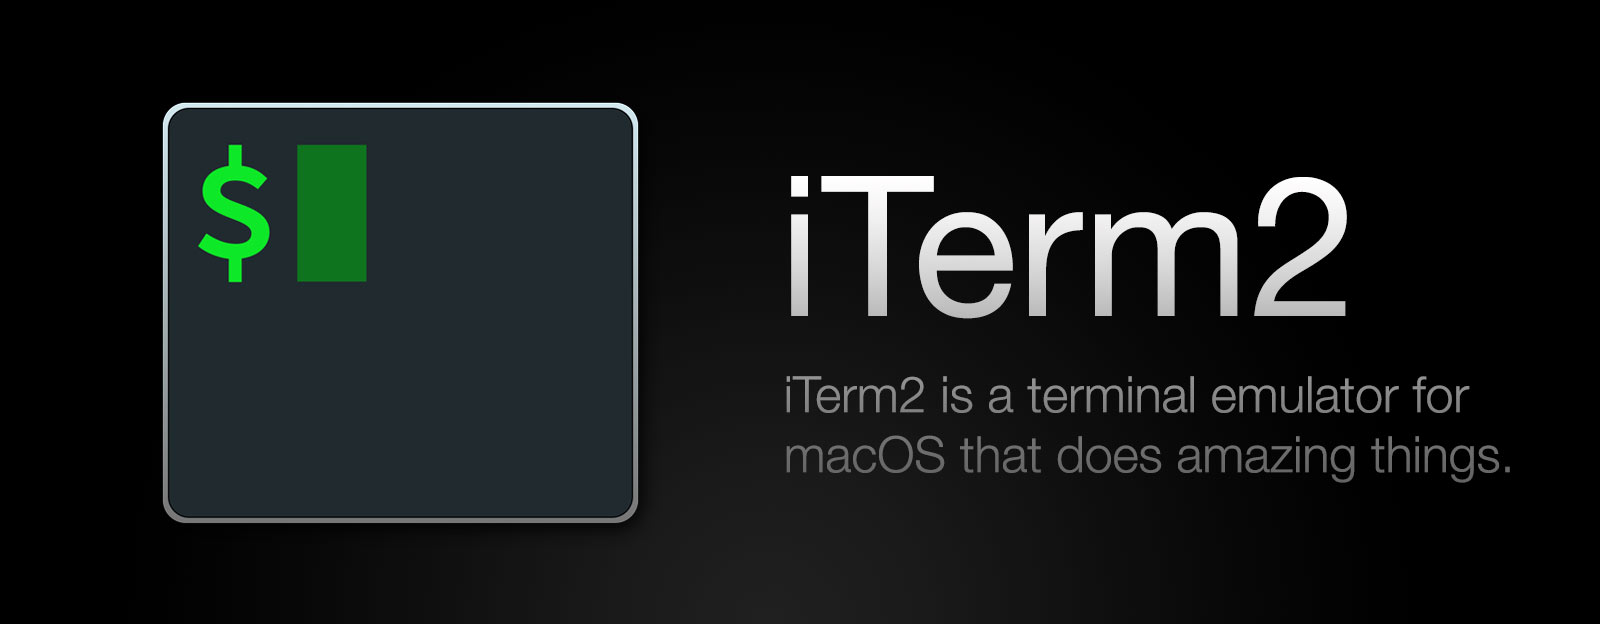 iterm2-logo2x.jpg